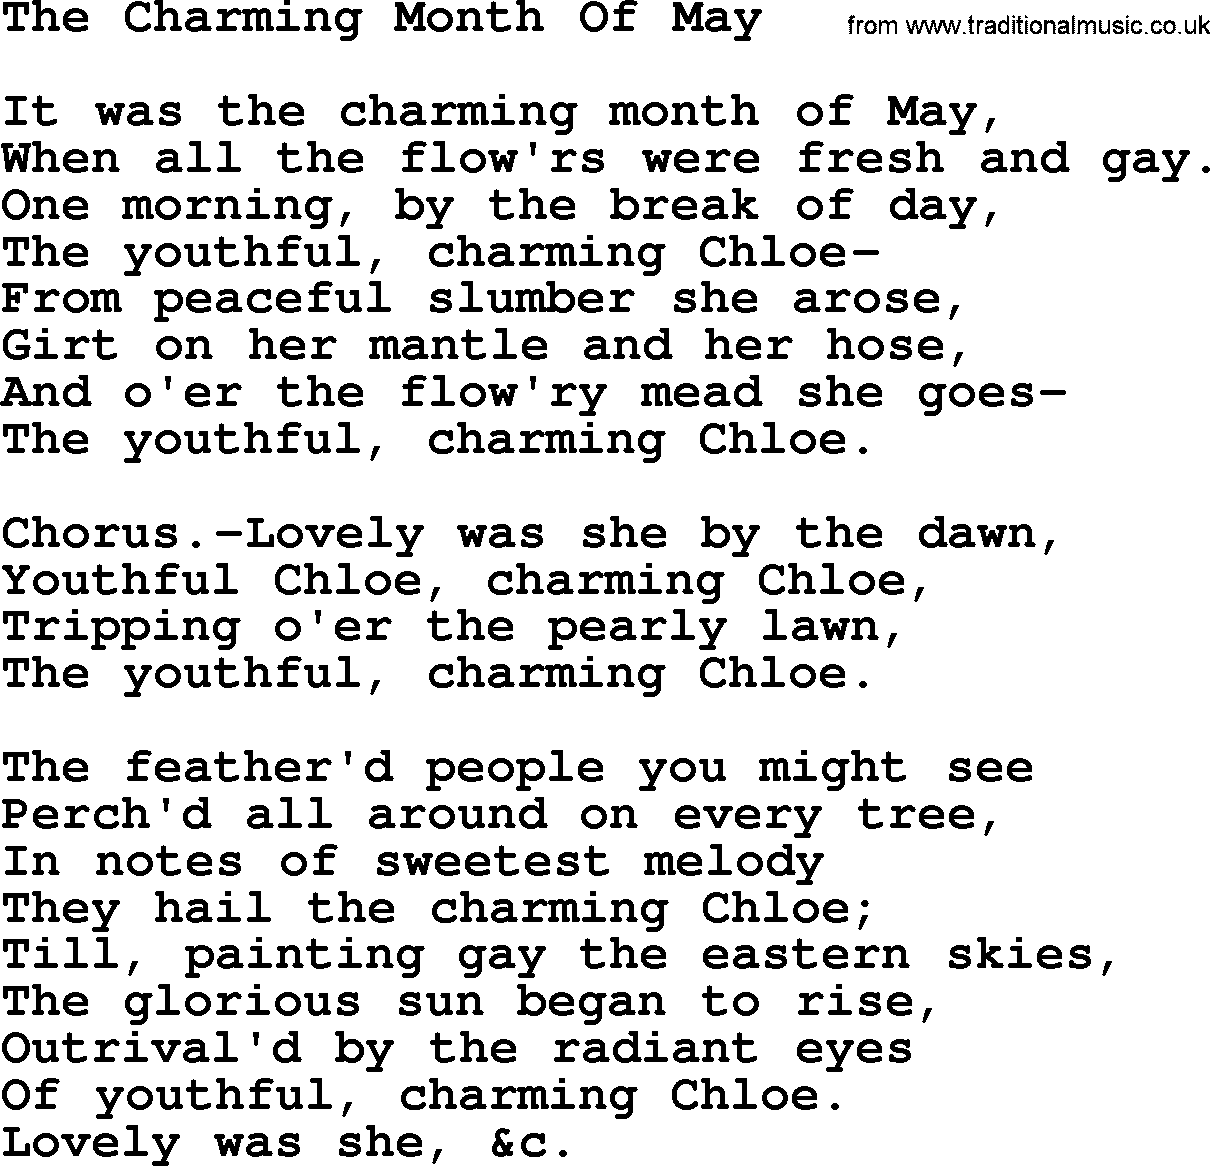 Robert Burns Songs & Lyrics: The Charming Month Of May